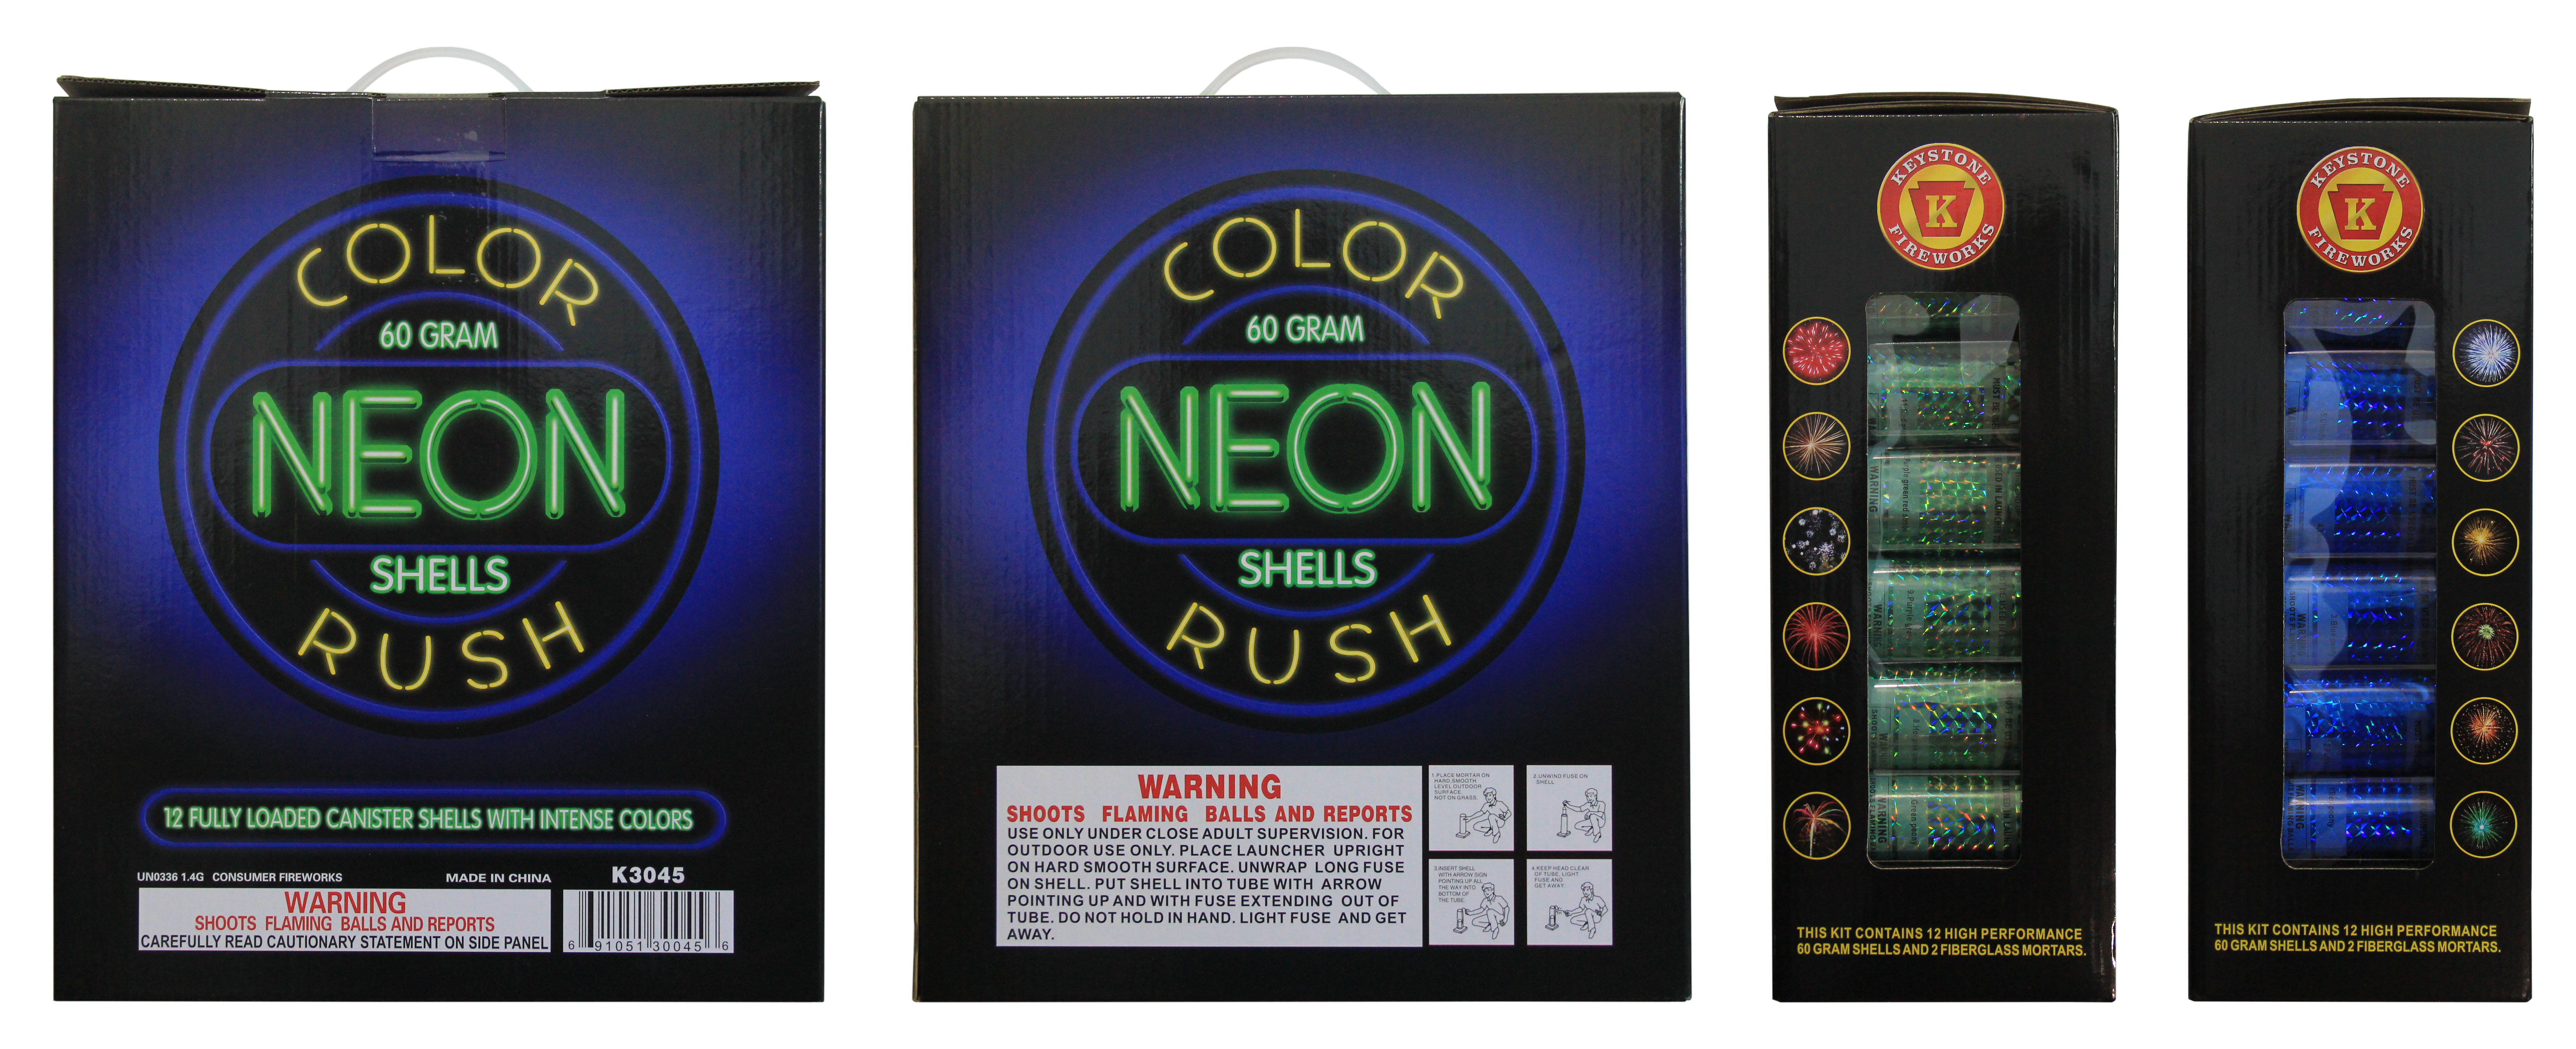 Color Rush Neon Shells